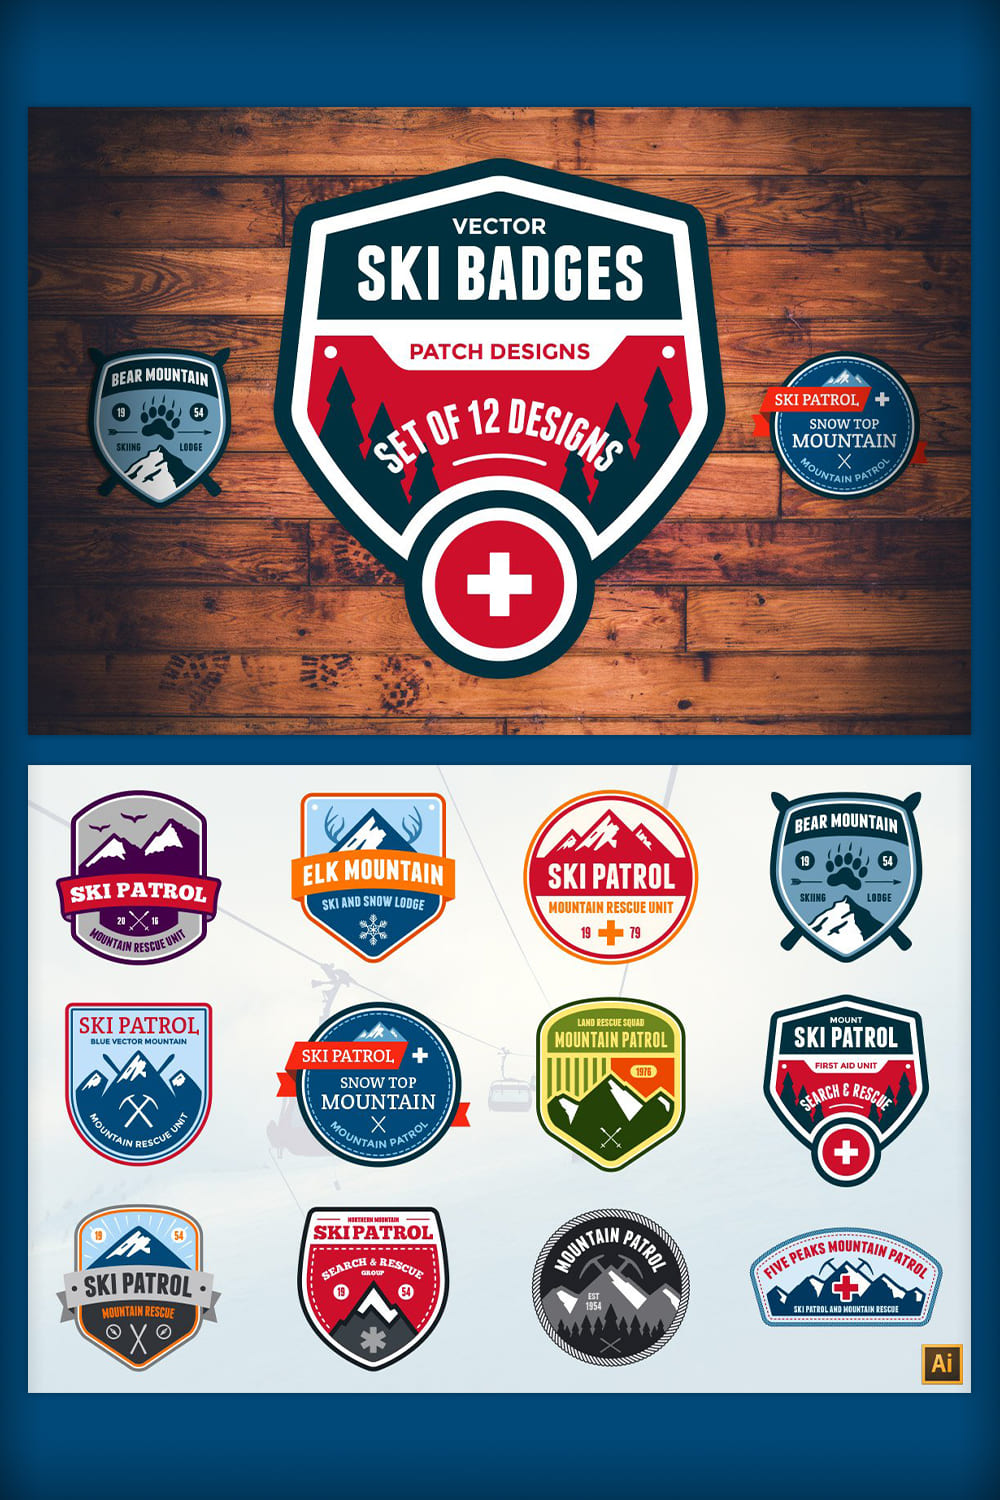 Ski Patrol Badges Pinterest image.